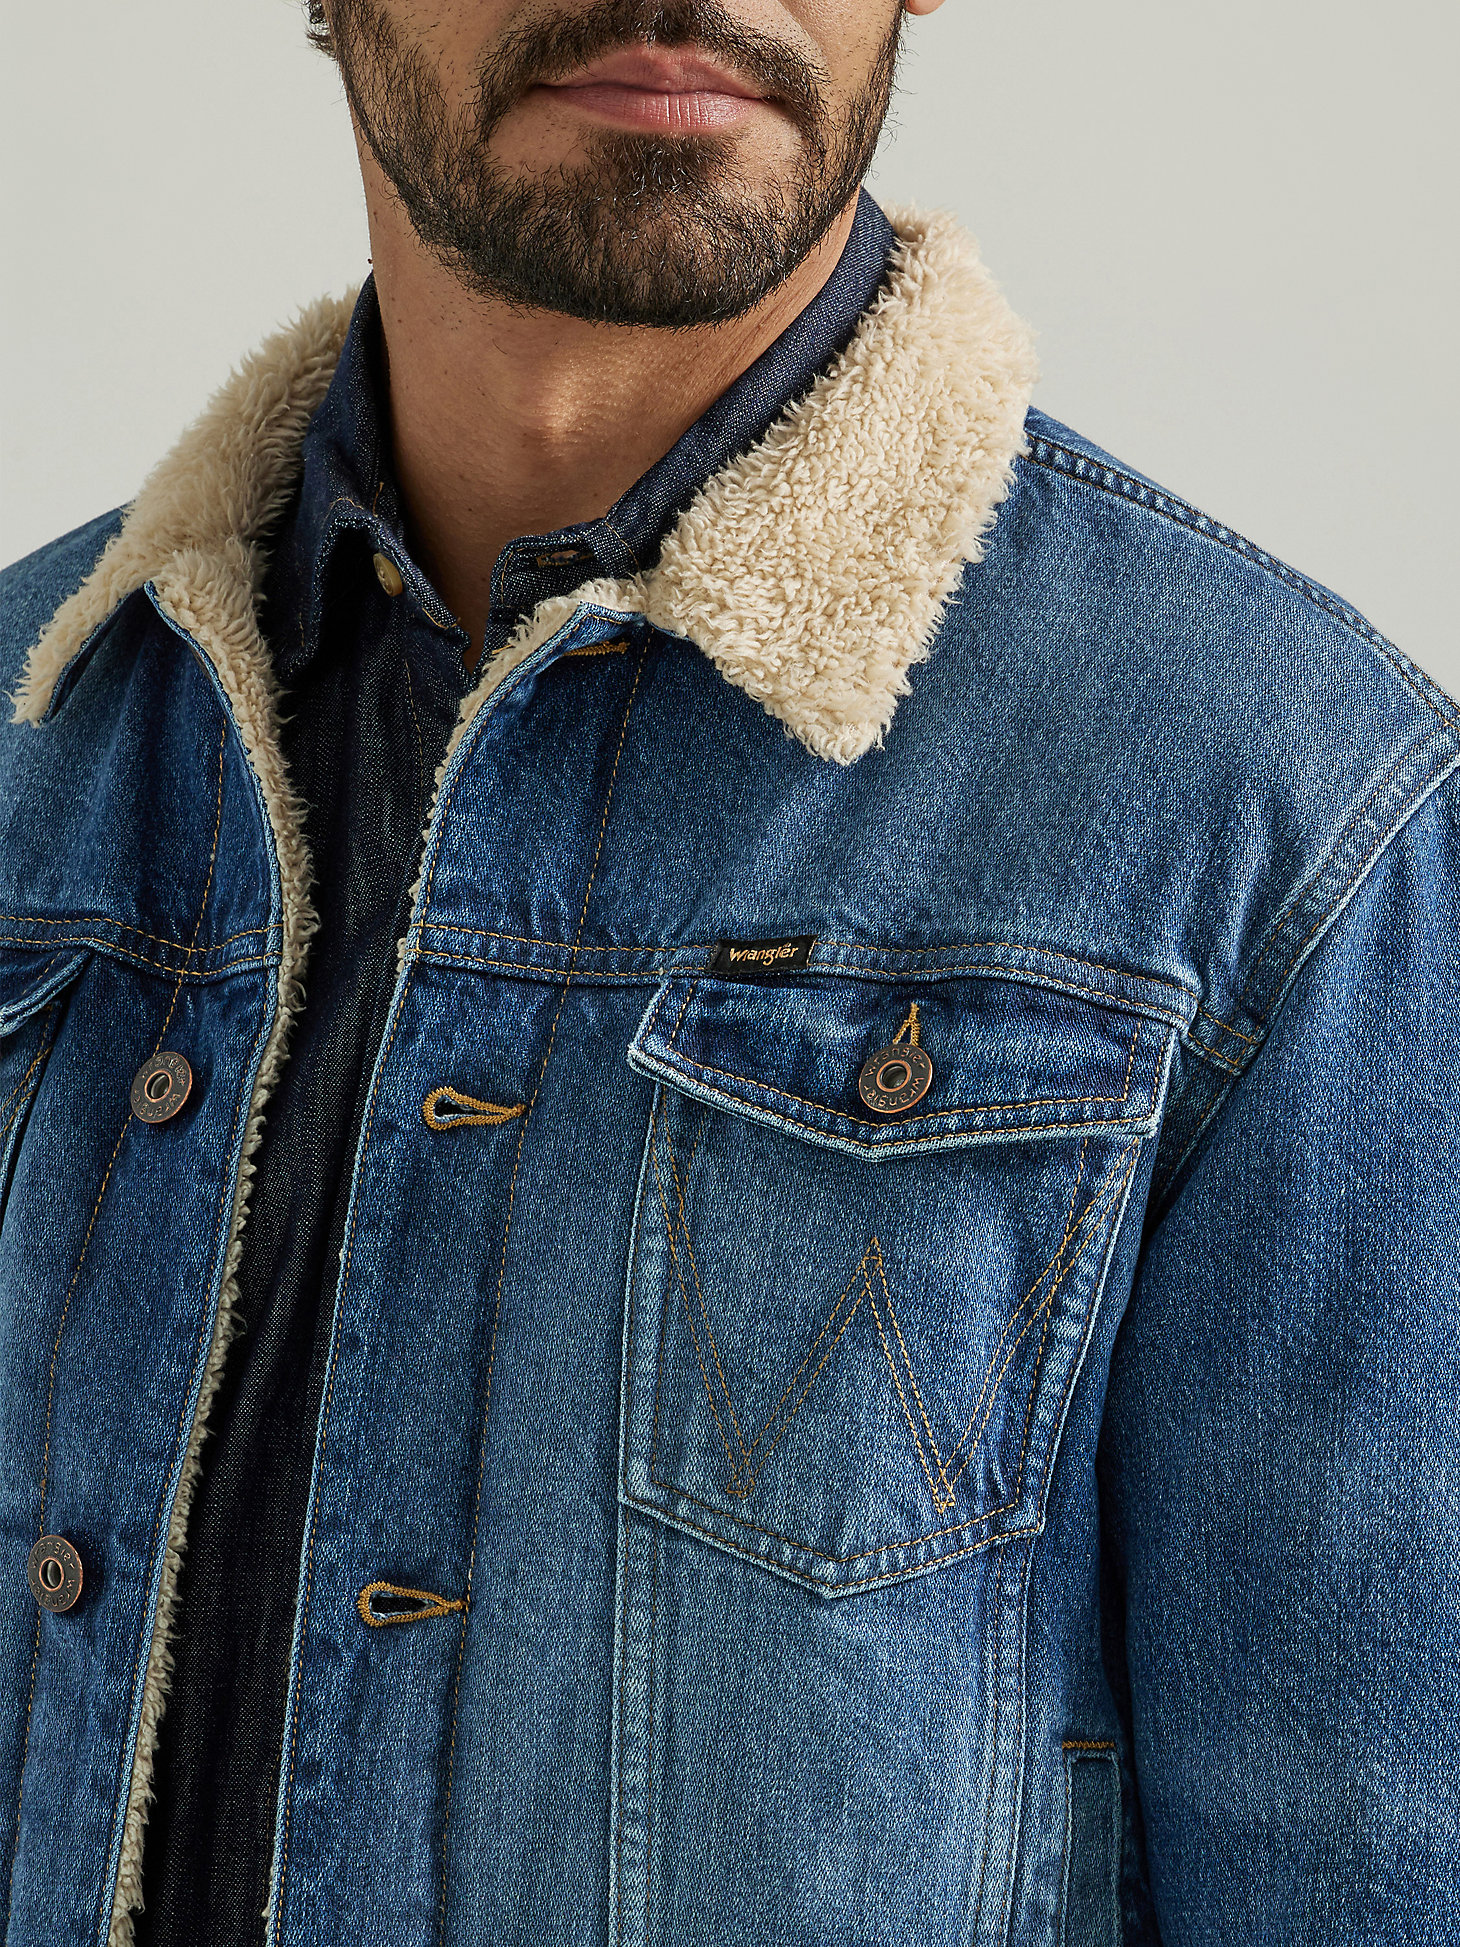 Men's Wrangler® Sherpa Lined Denim Jacket in Mid Wash alternative view 4